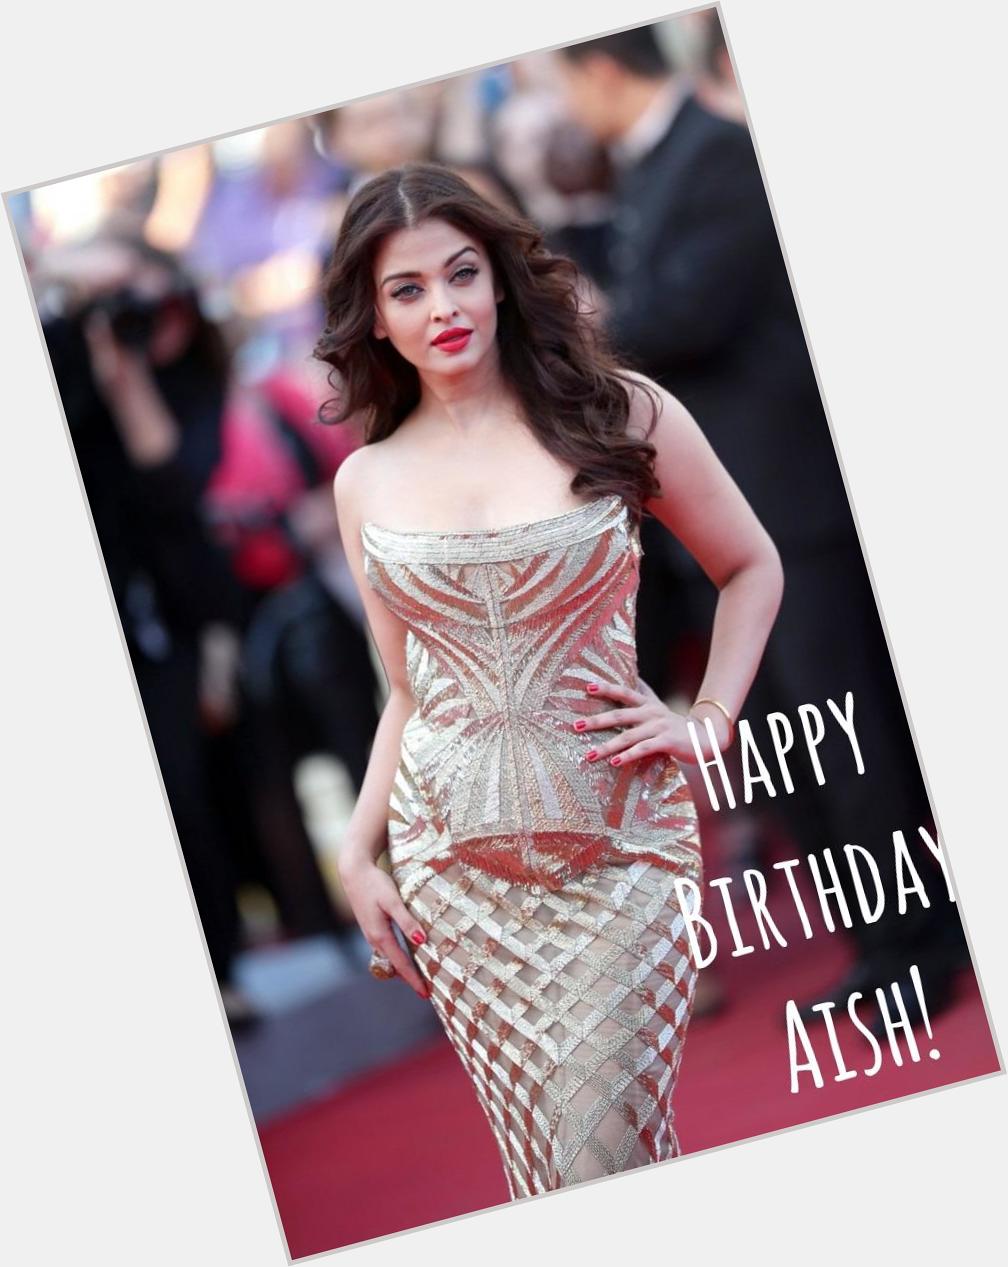 Happy Birthday Aishwarya Rai Bachchan!
Keep rocking, you gorgeous lady! 